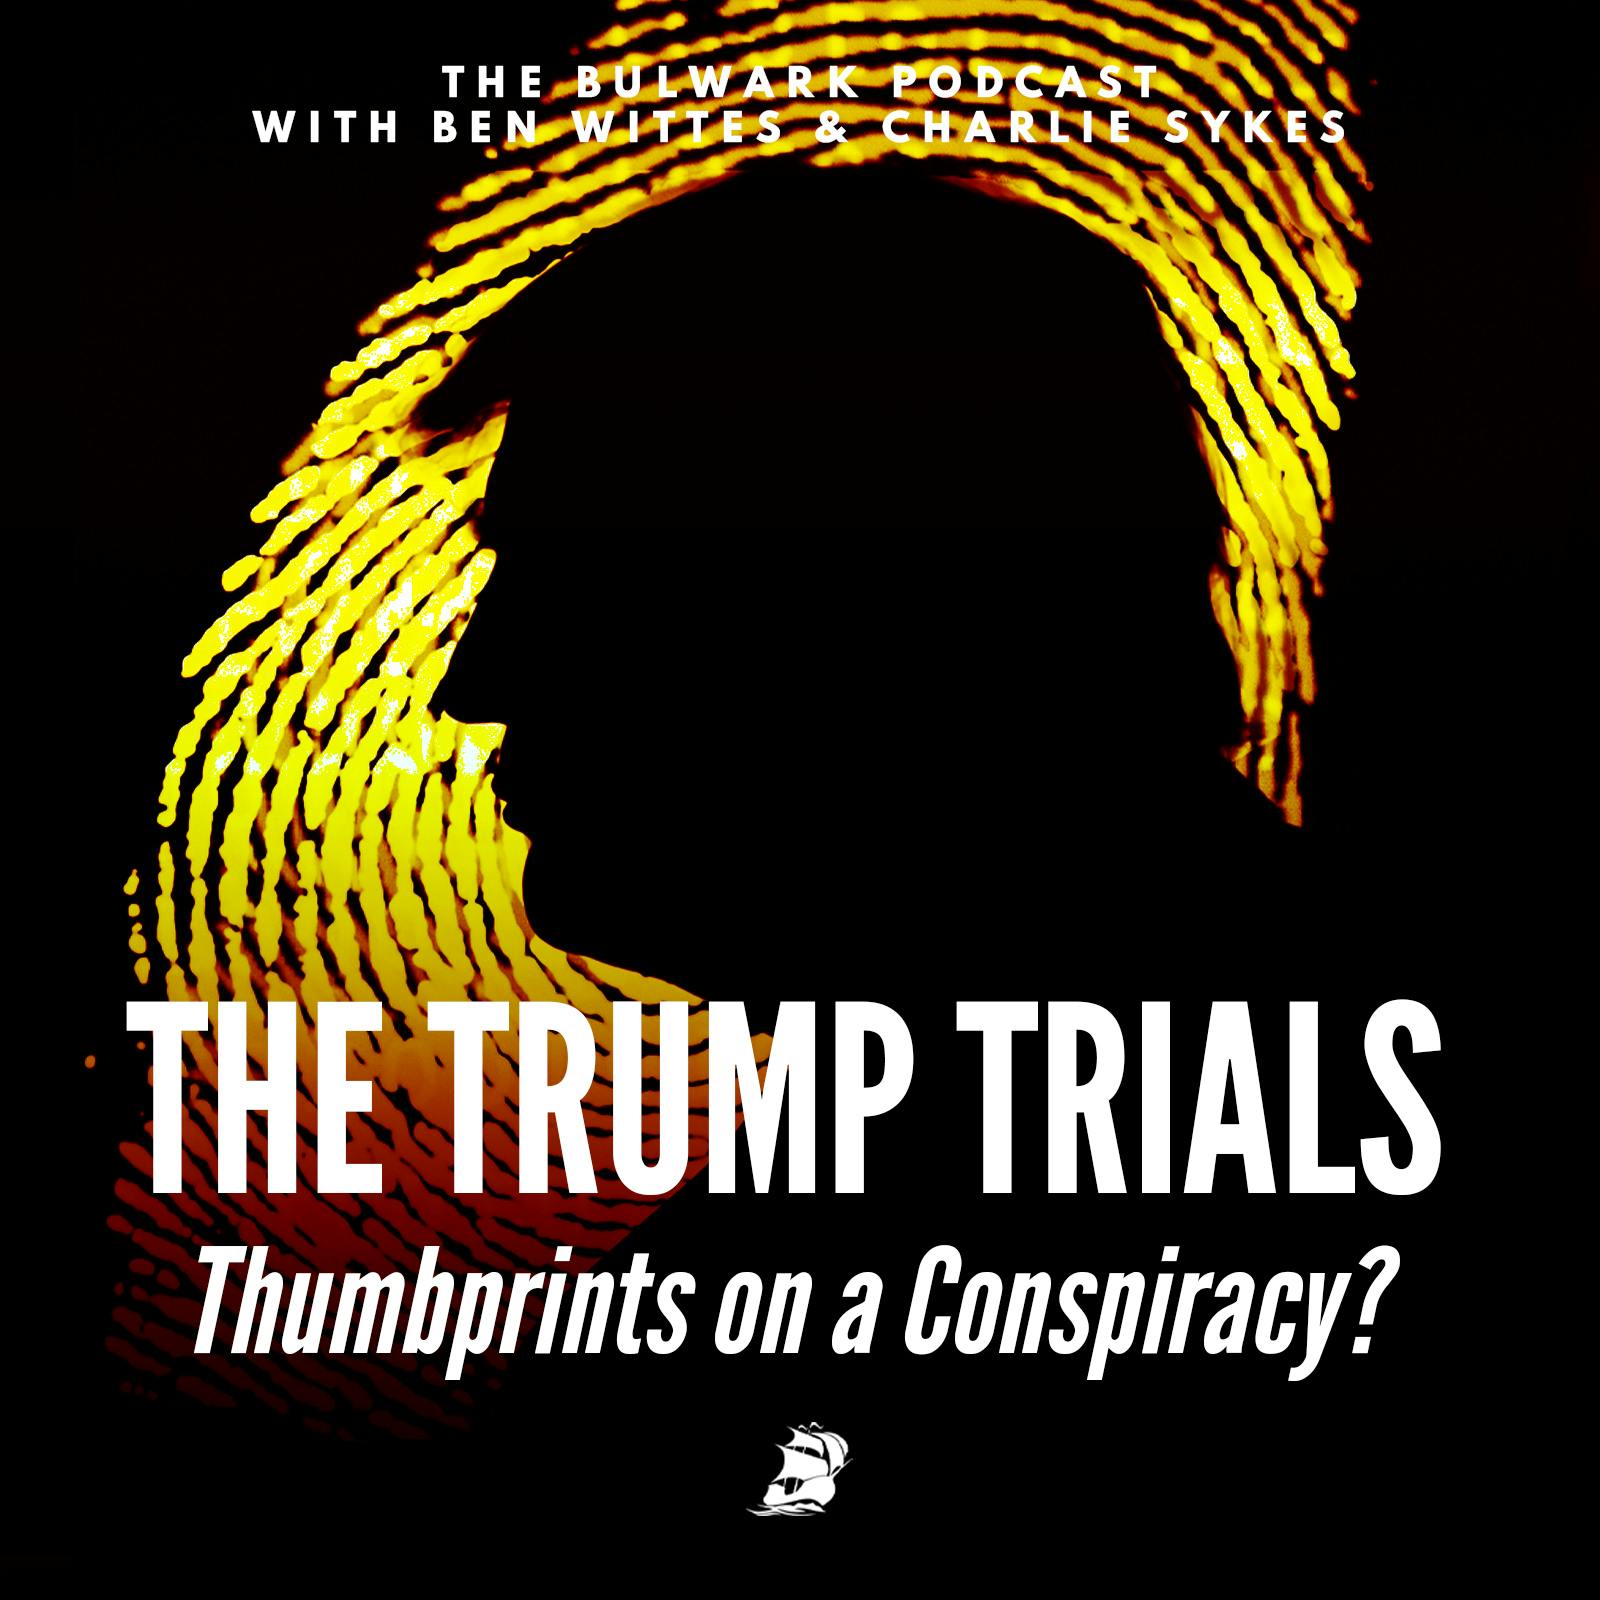 Thumbprints on a Conspiracy?